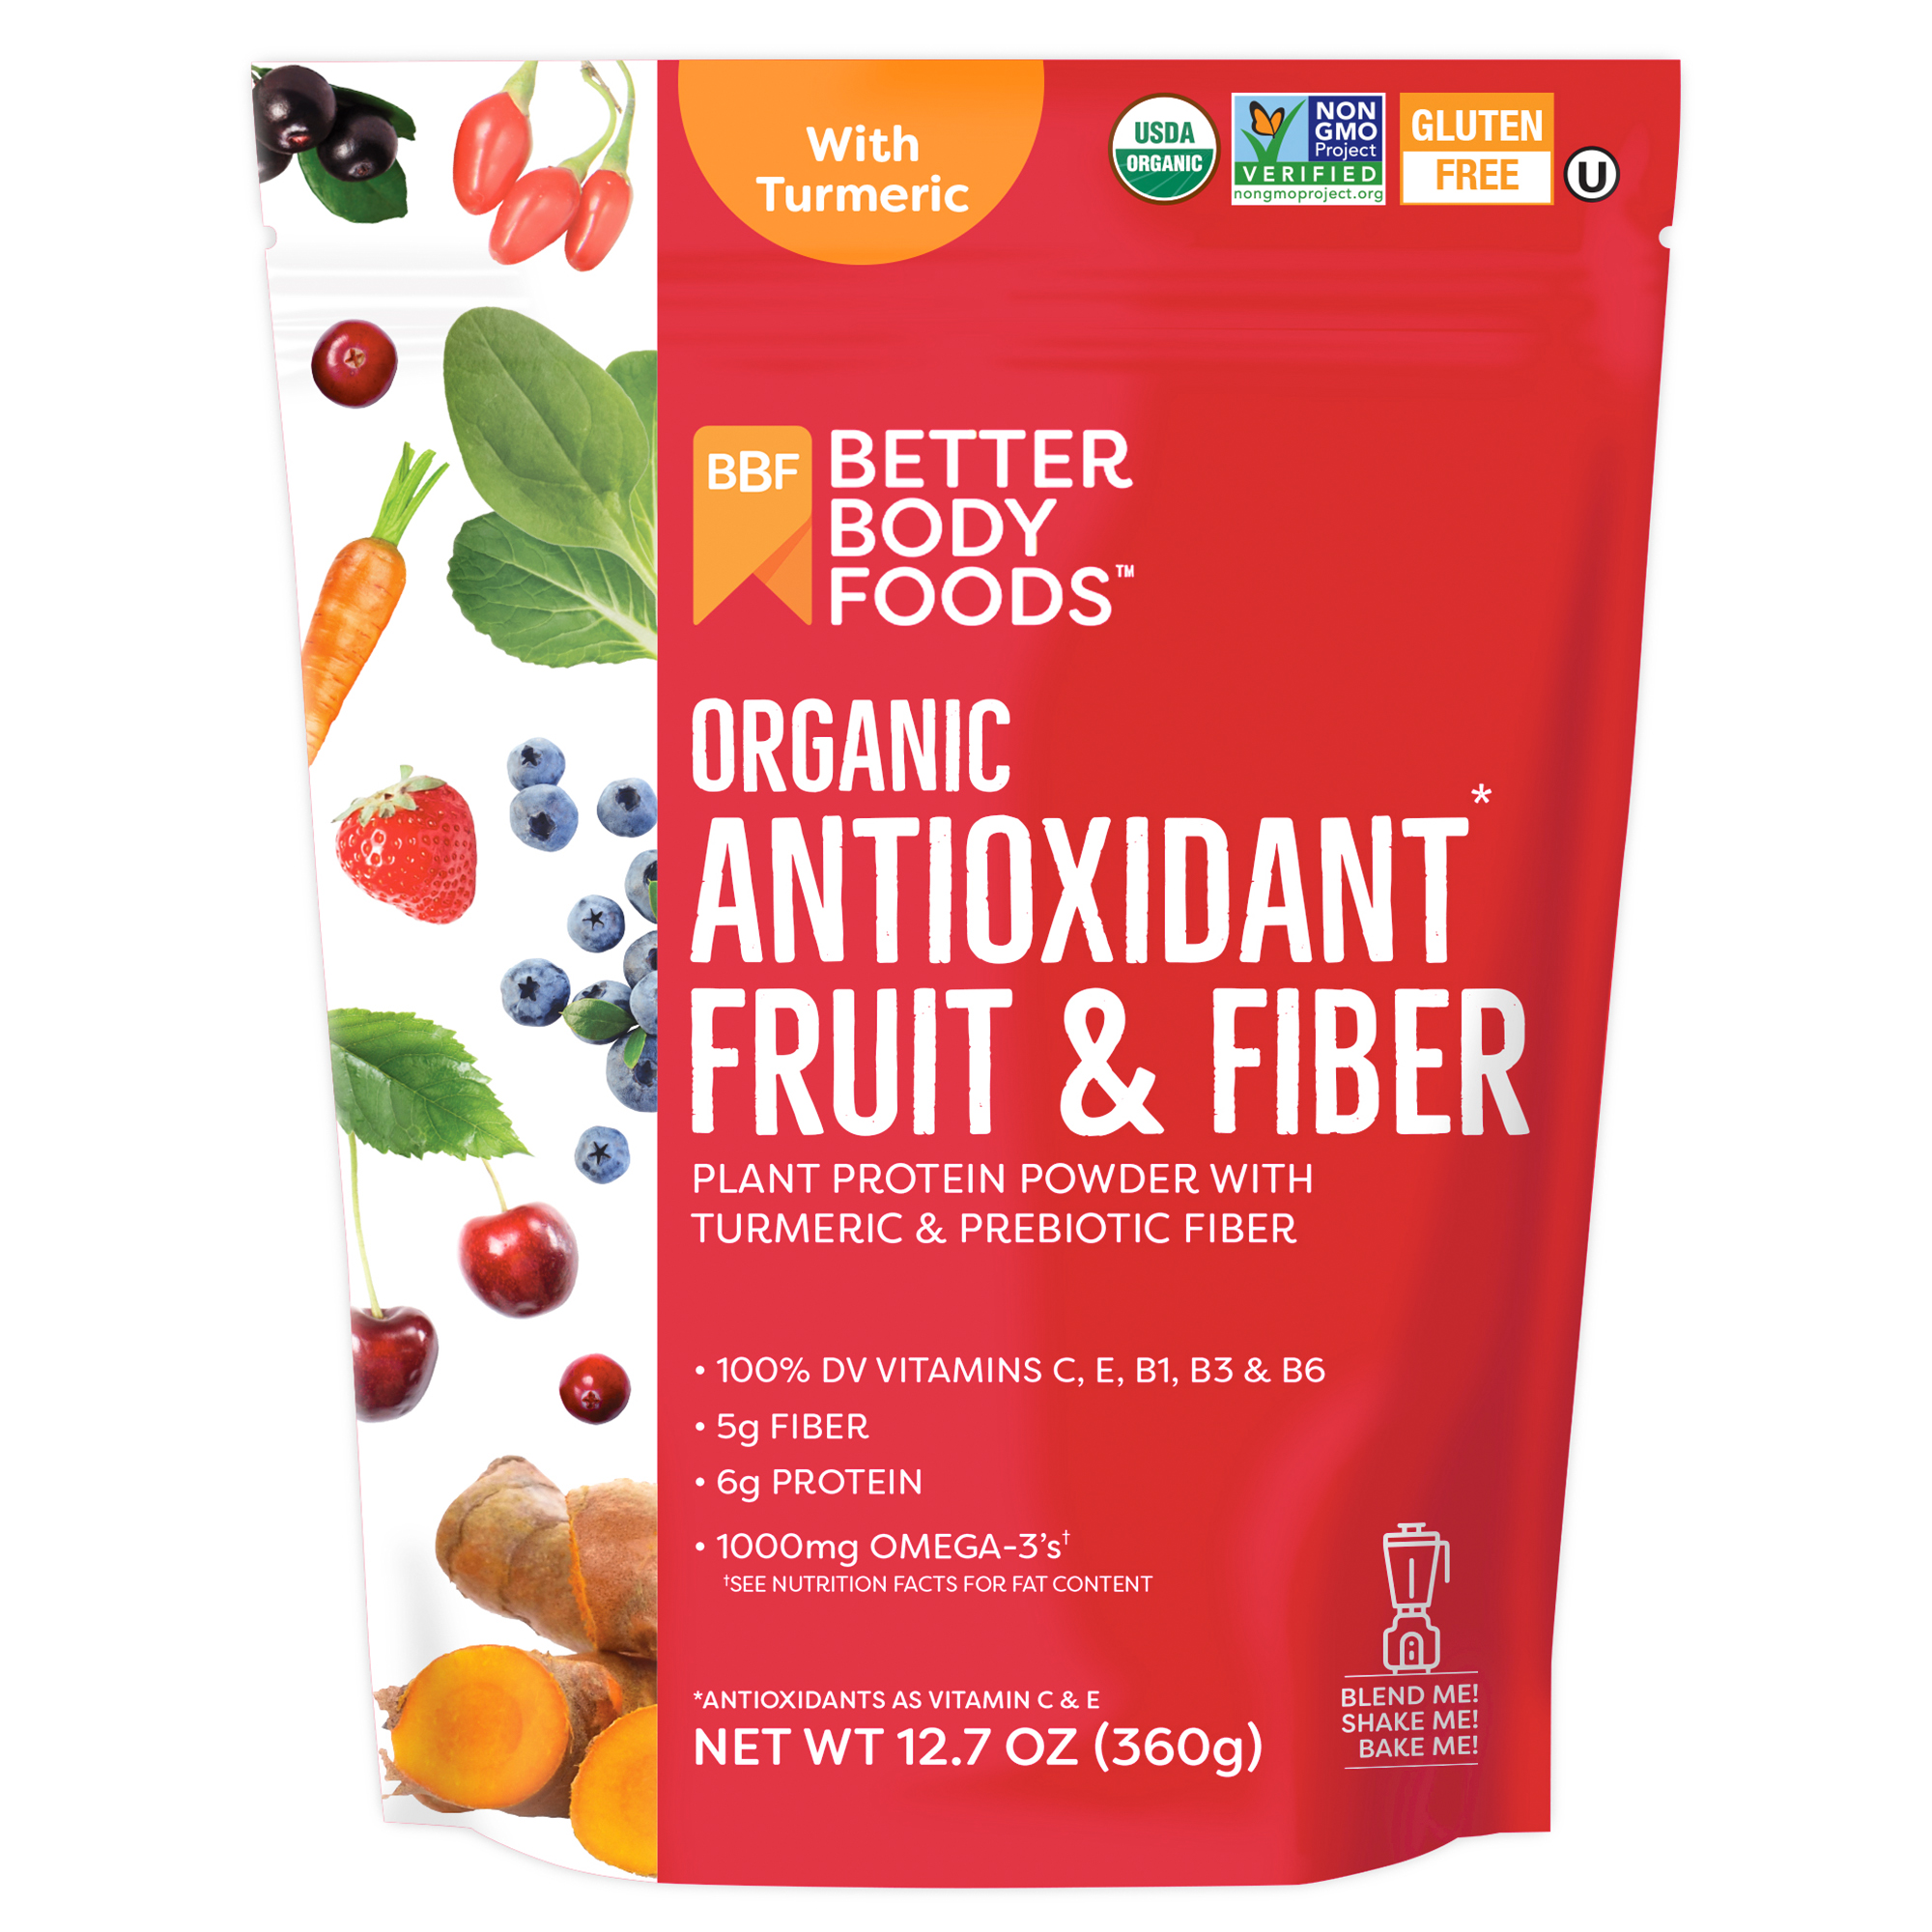 BetterBody Foods Antioxidant Fruit & Fiber Powder, 12.7 oz, Pack of 1 - image 1 of 9